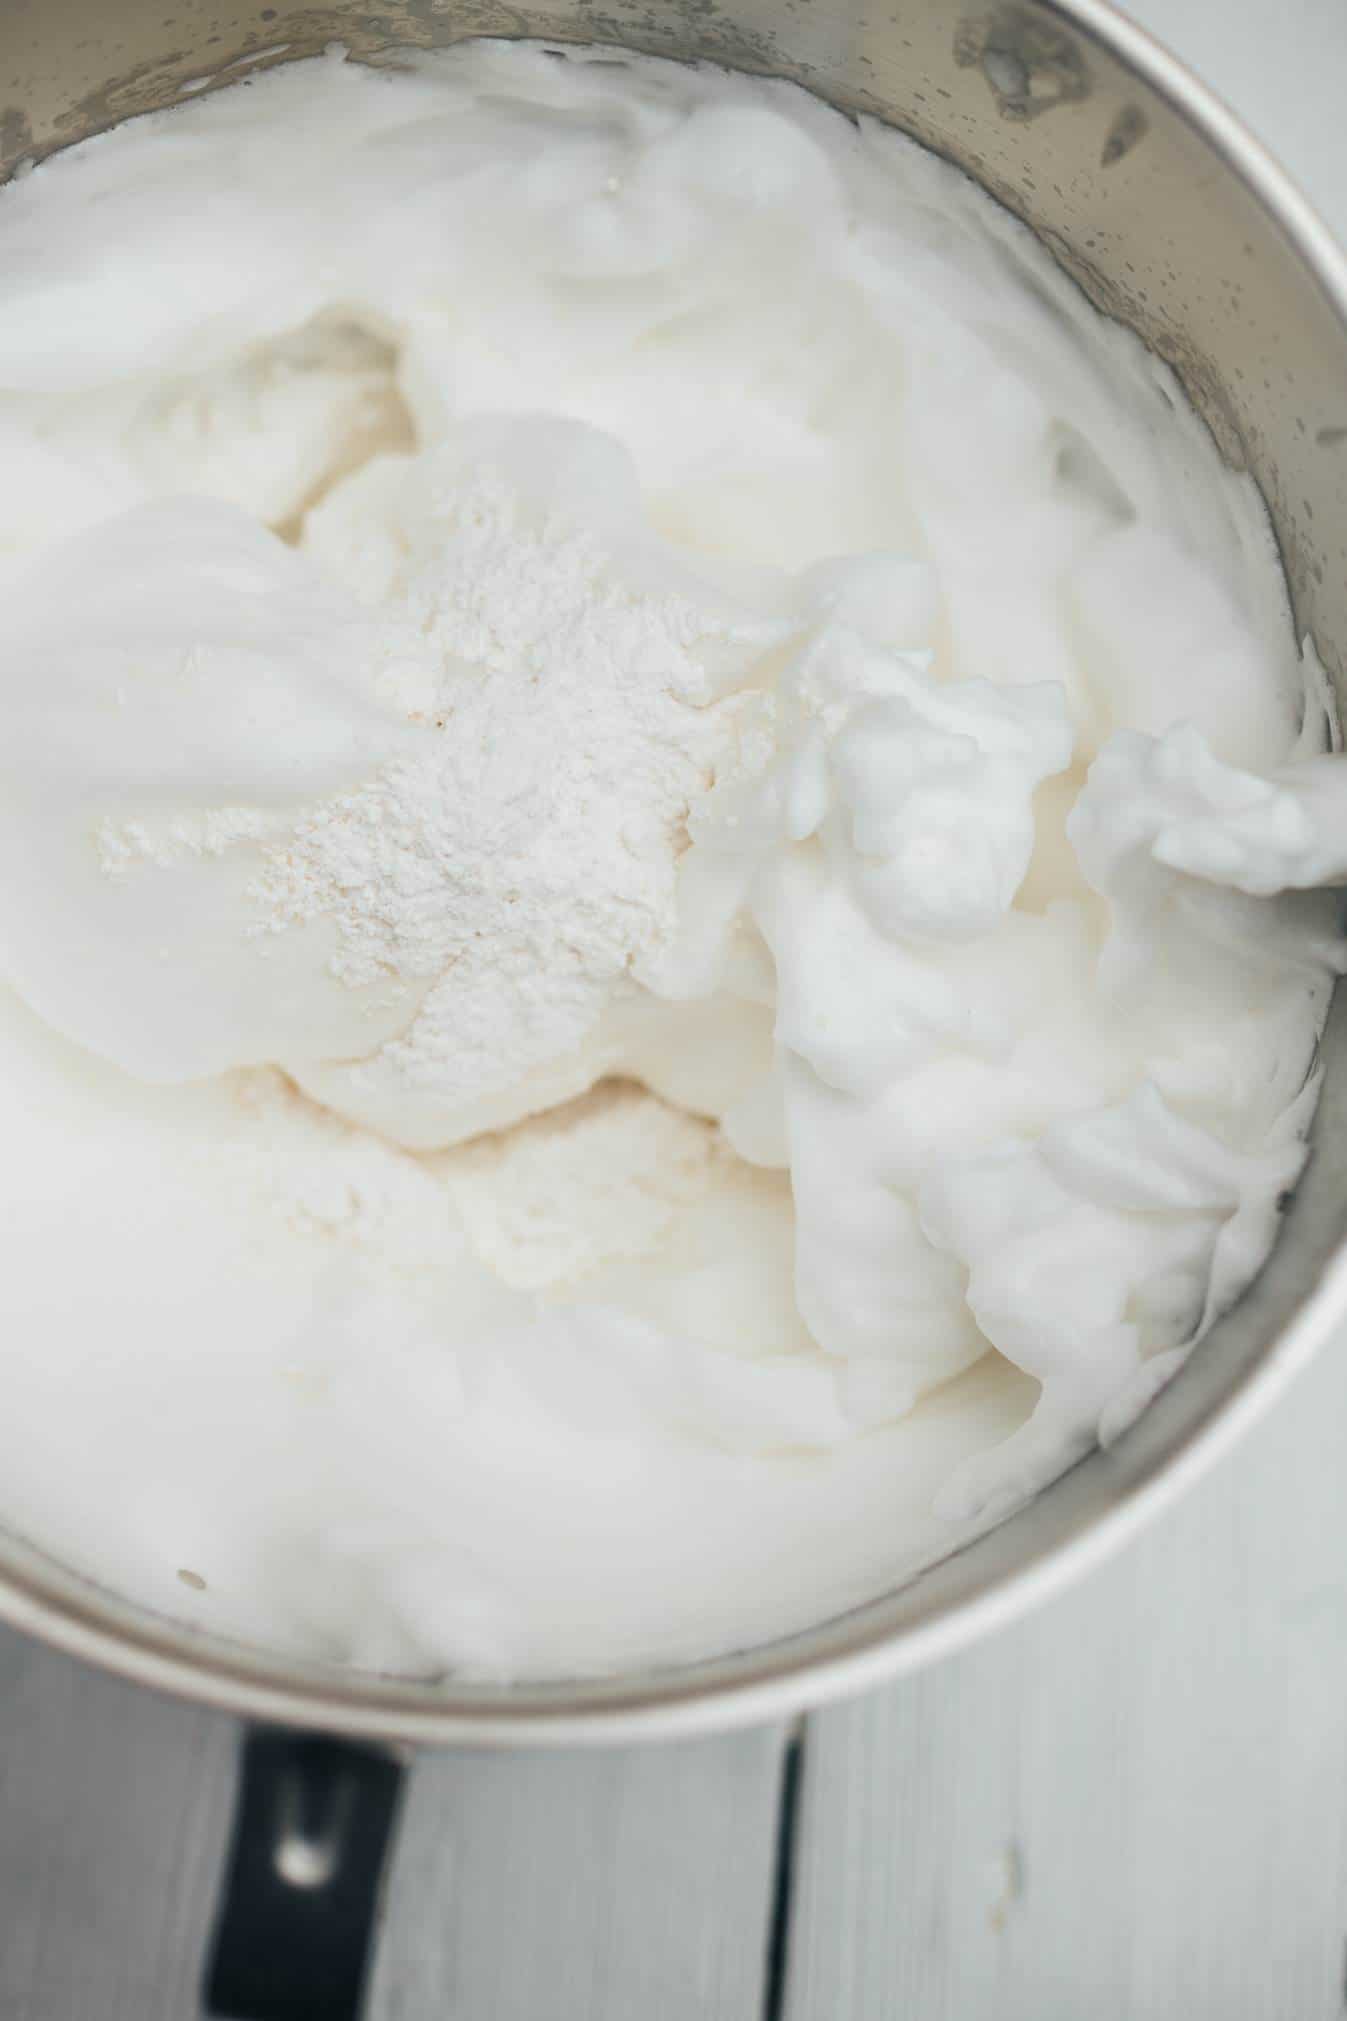 Make your own aquafaba - vegan beaten egg whites - recipe